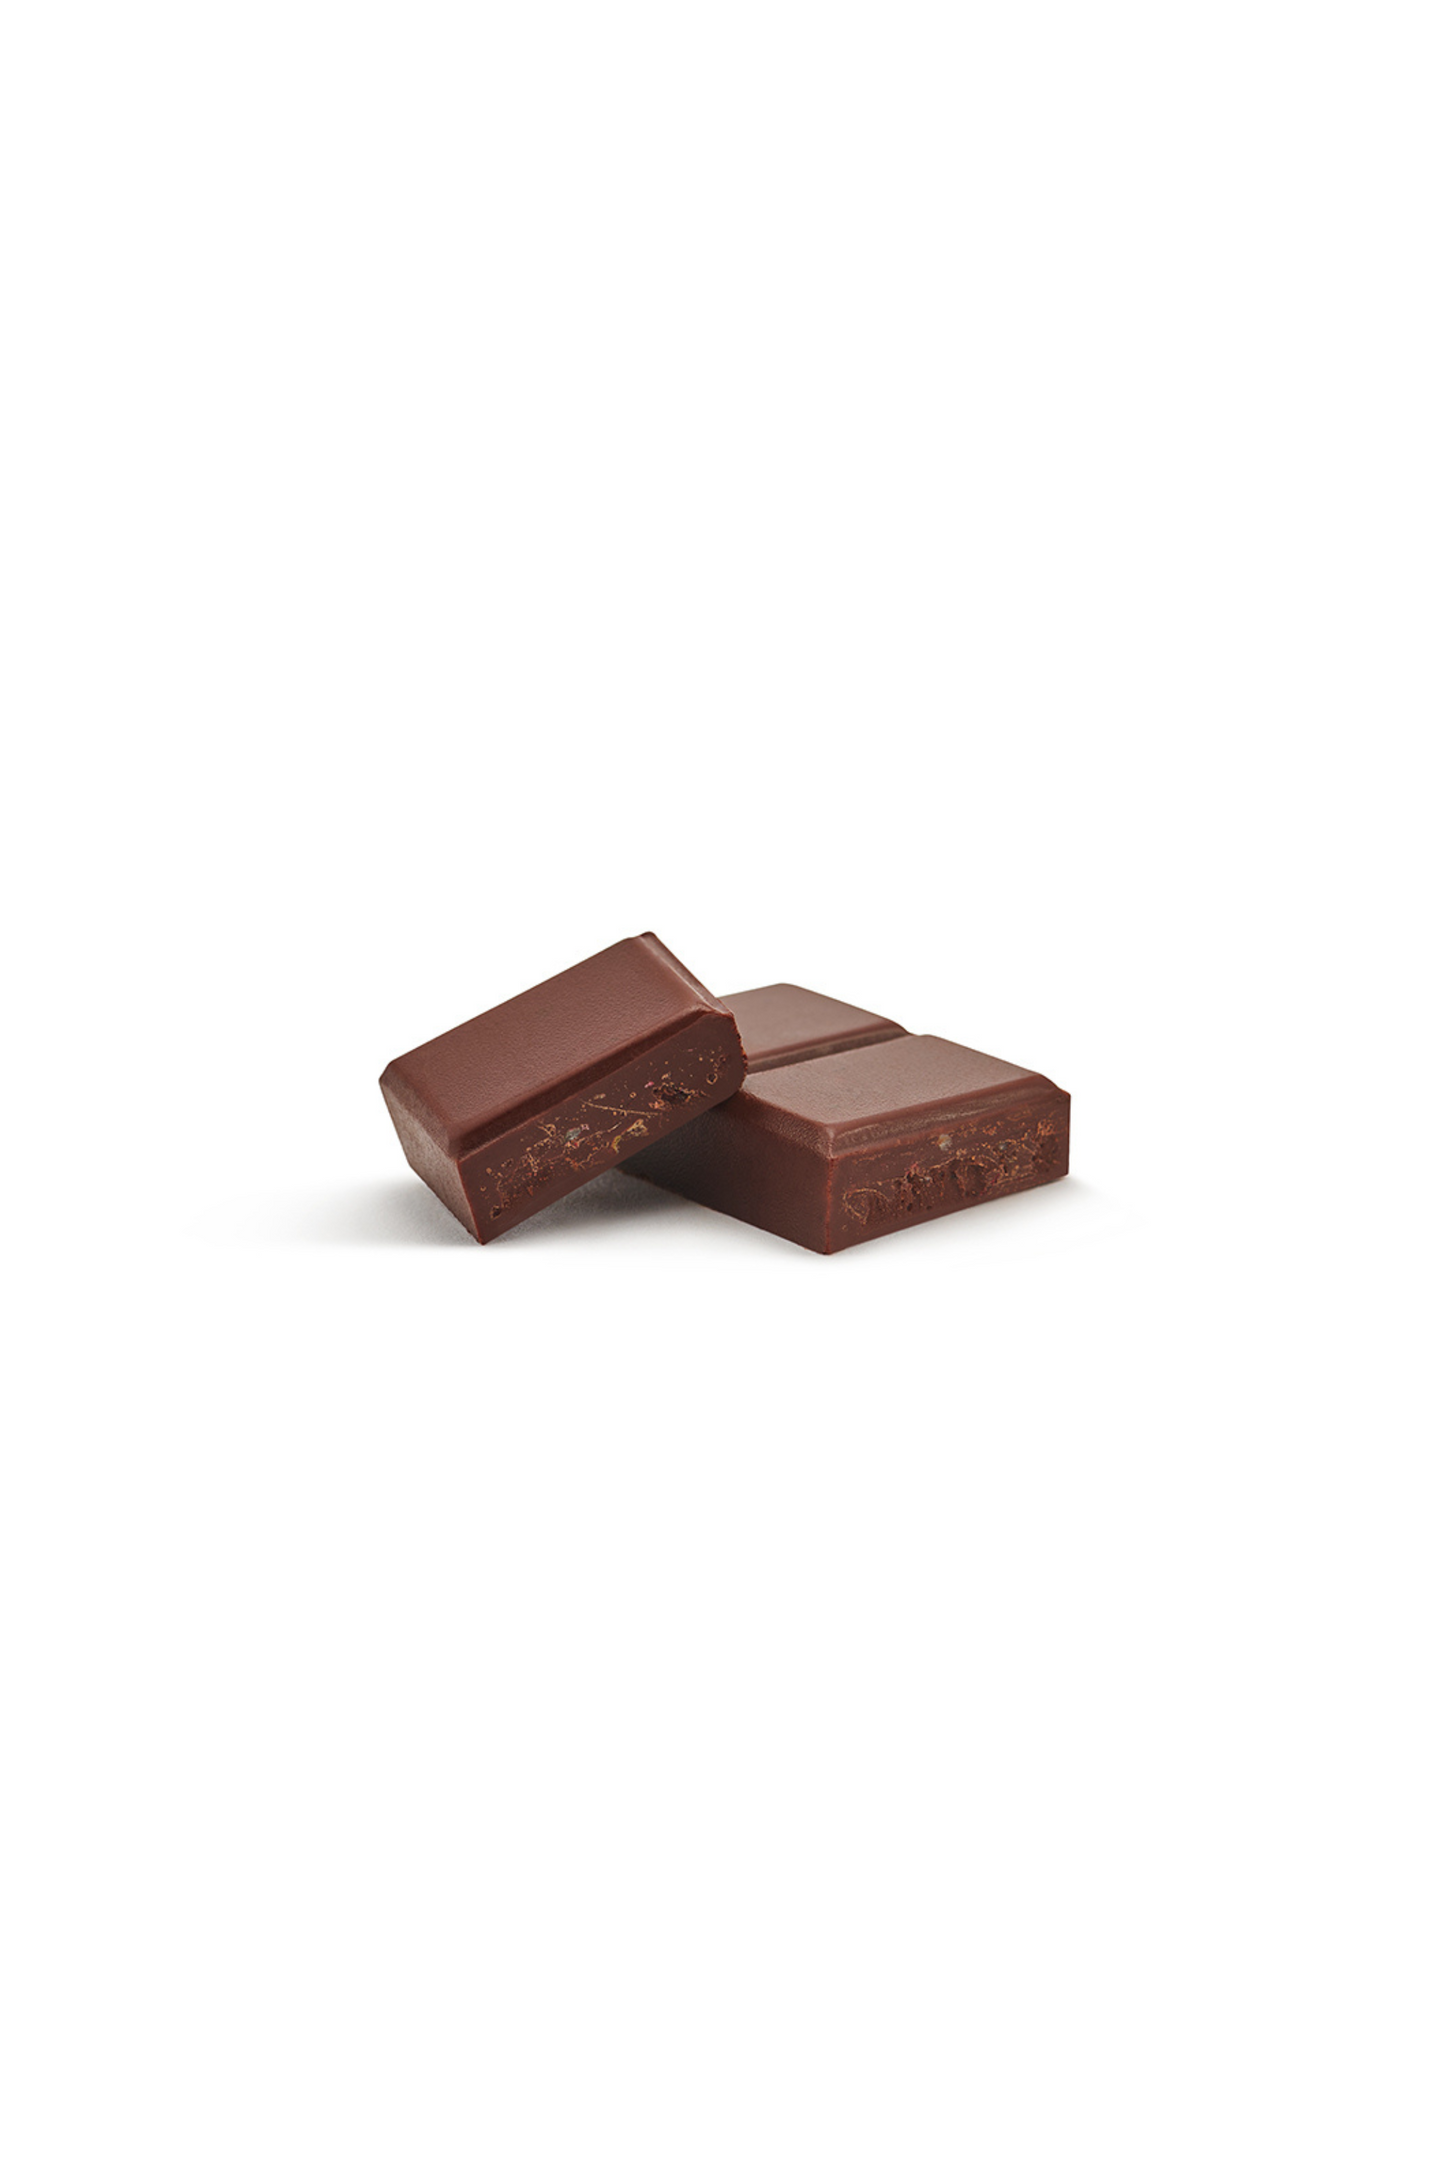 Schwarze Ribisel Zartbitter Schokolade,  ohne Zuckerzusatz 70% Kakaoanteil. Vegan. Bean-to-Bar